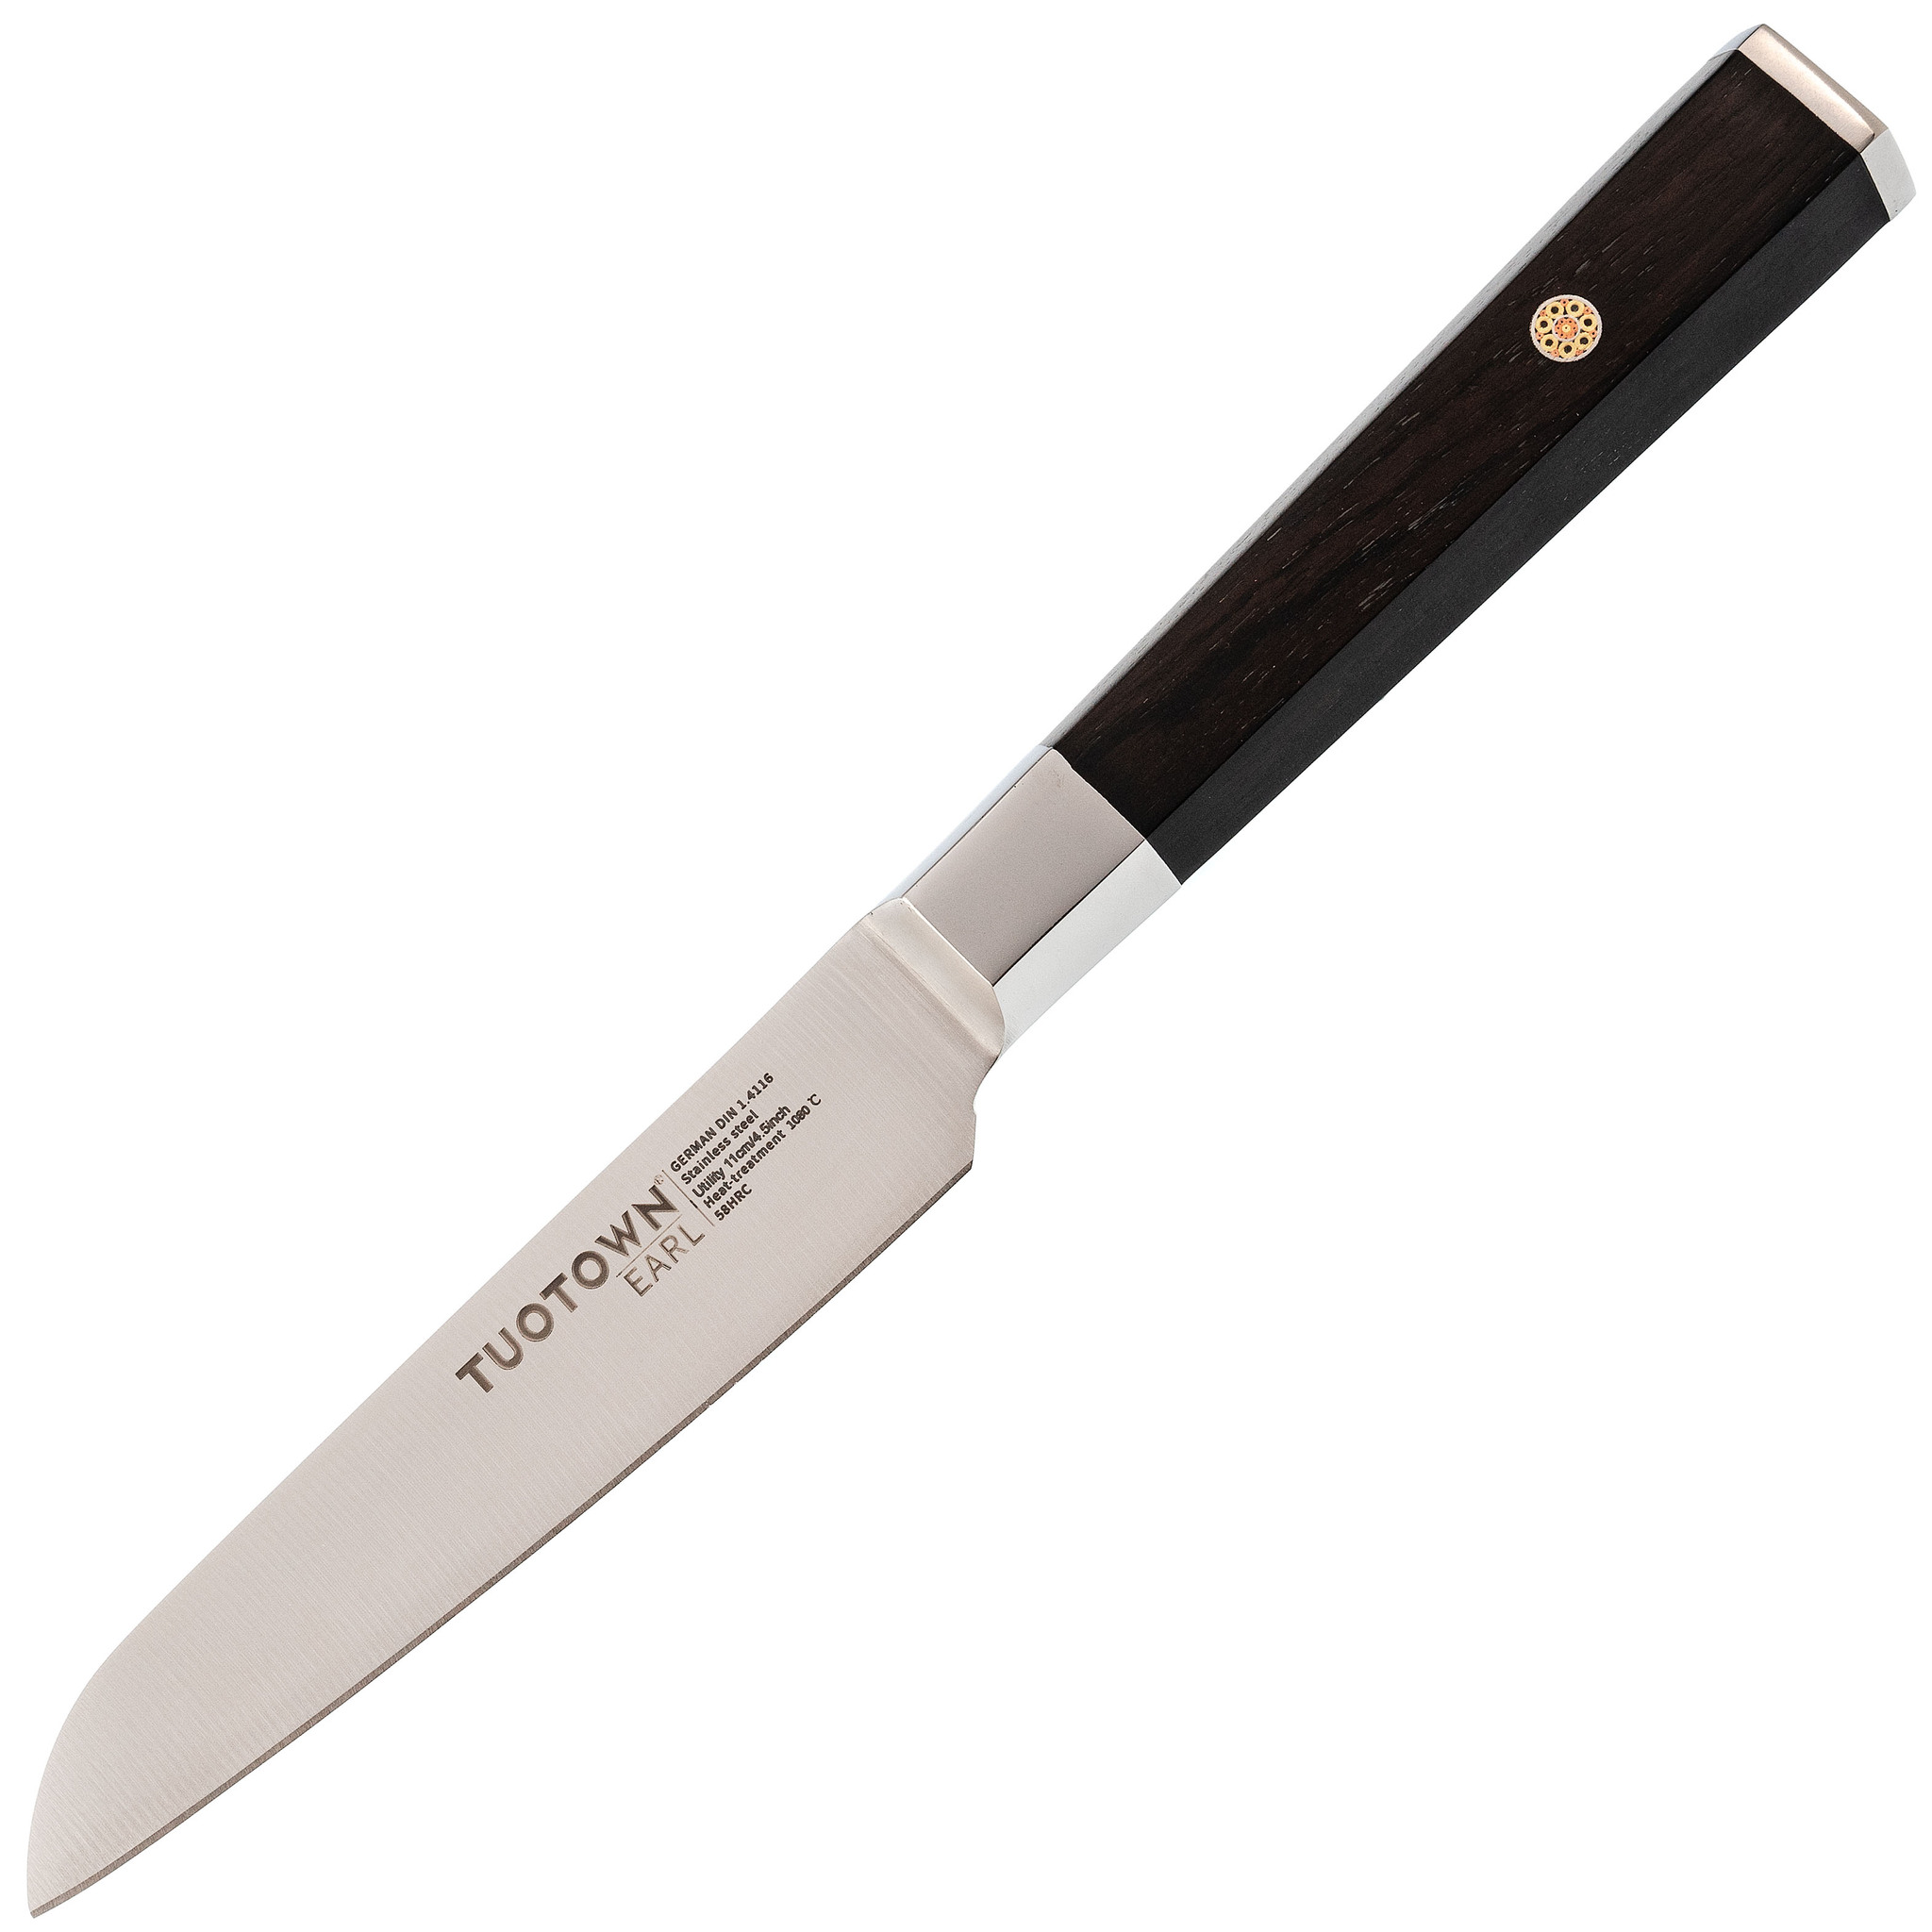 Кухонный нож универсальный Tuotown, 115 мм